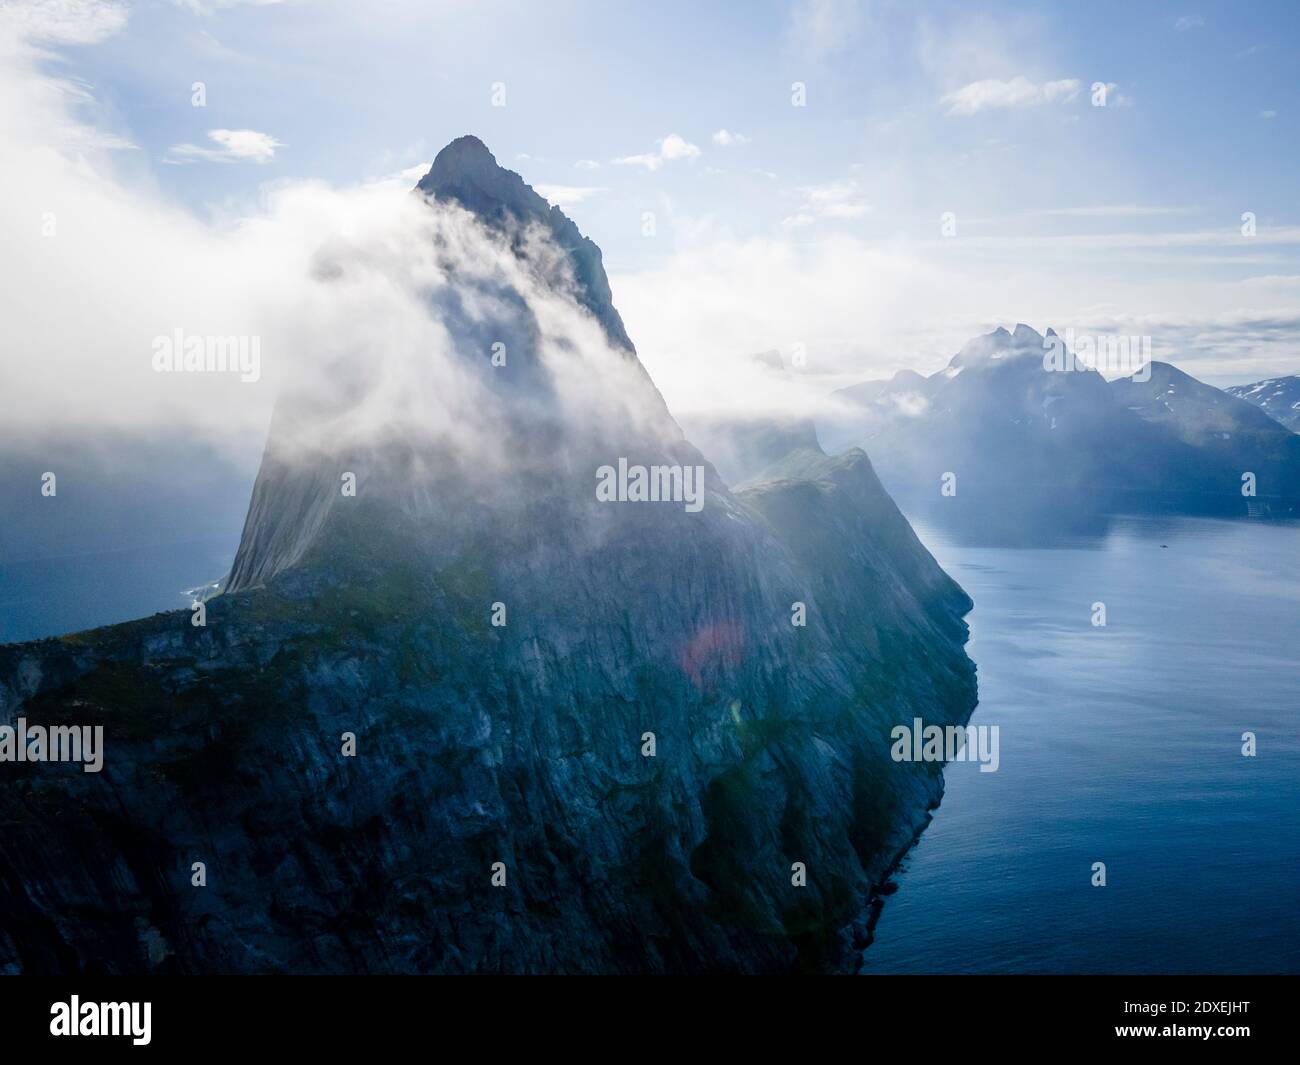 Scenic view of Segla mountain at Norway Stock Photo